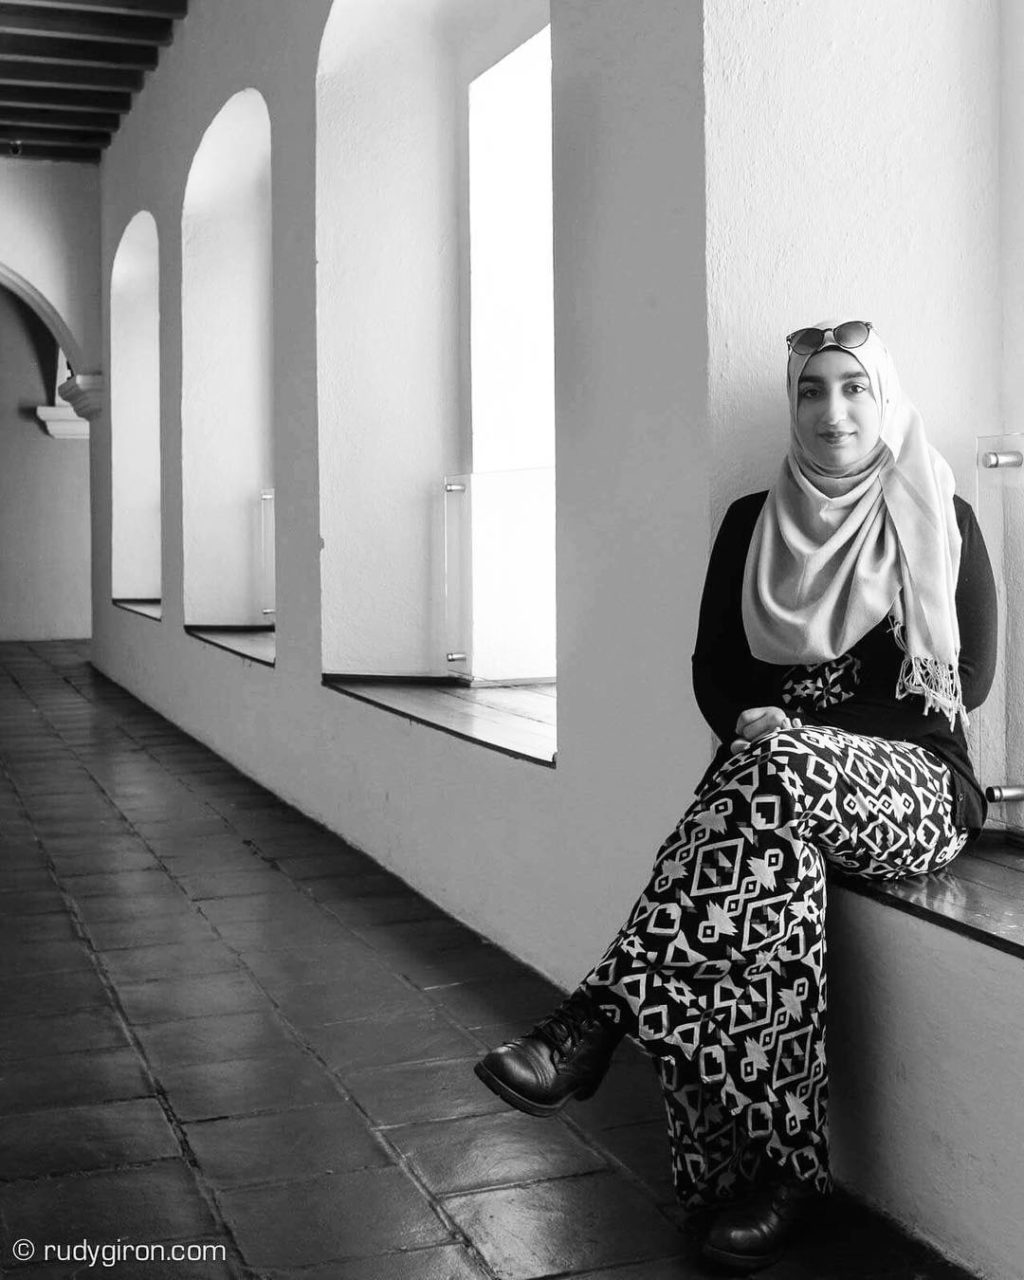 Portraits of Strangers — Meet Saba, a New Yorker